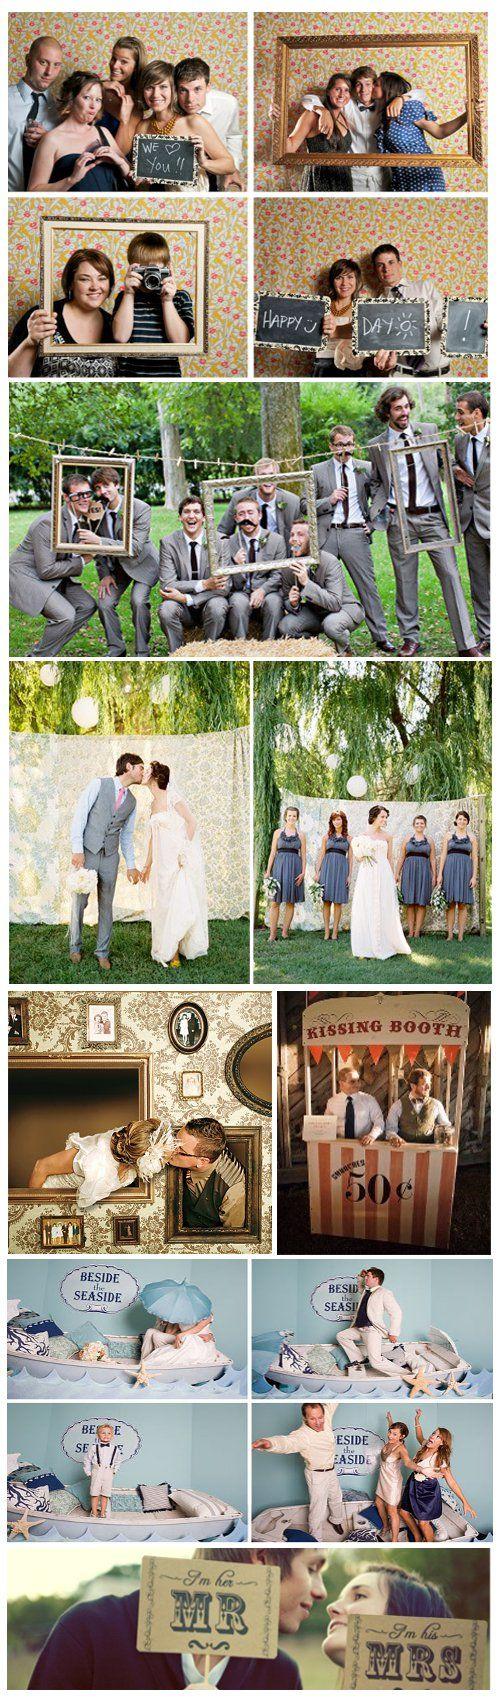 زفاف - Wedding Photo Booth Ideas 